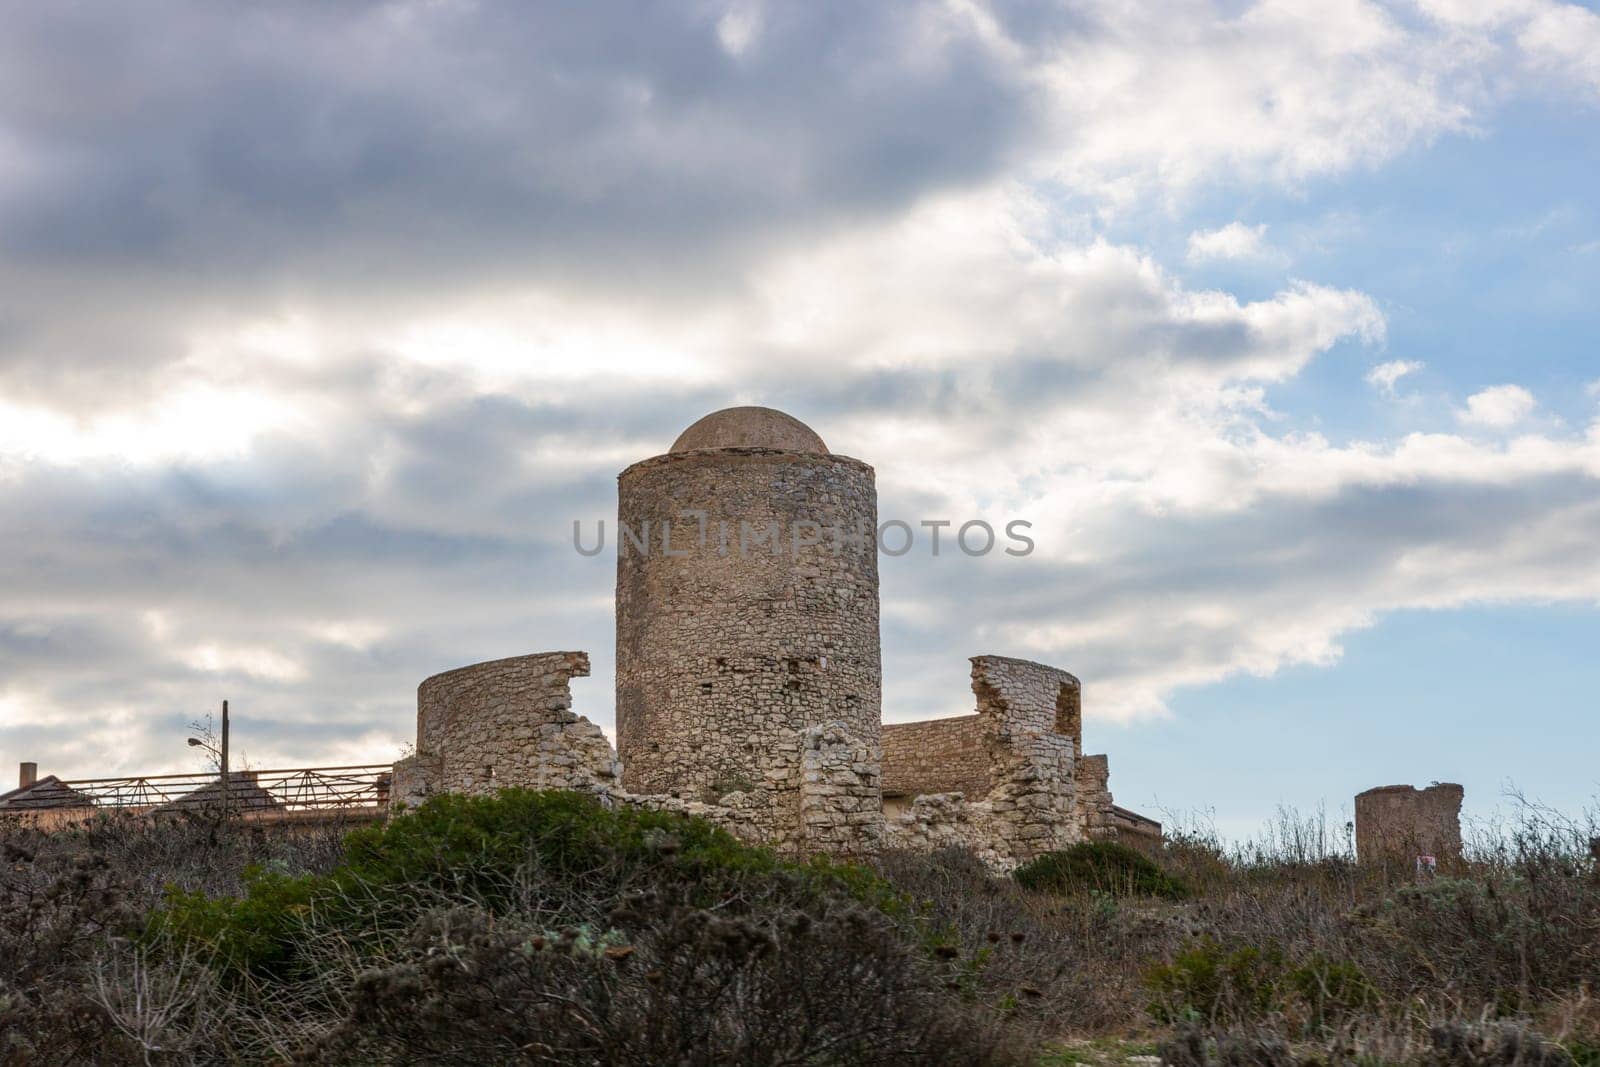 Bonifacio town, medieval citadel in Corsica Island, France